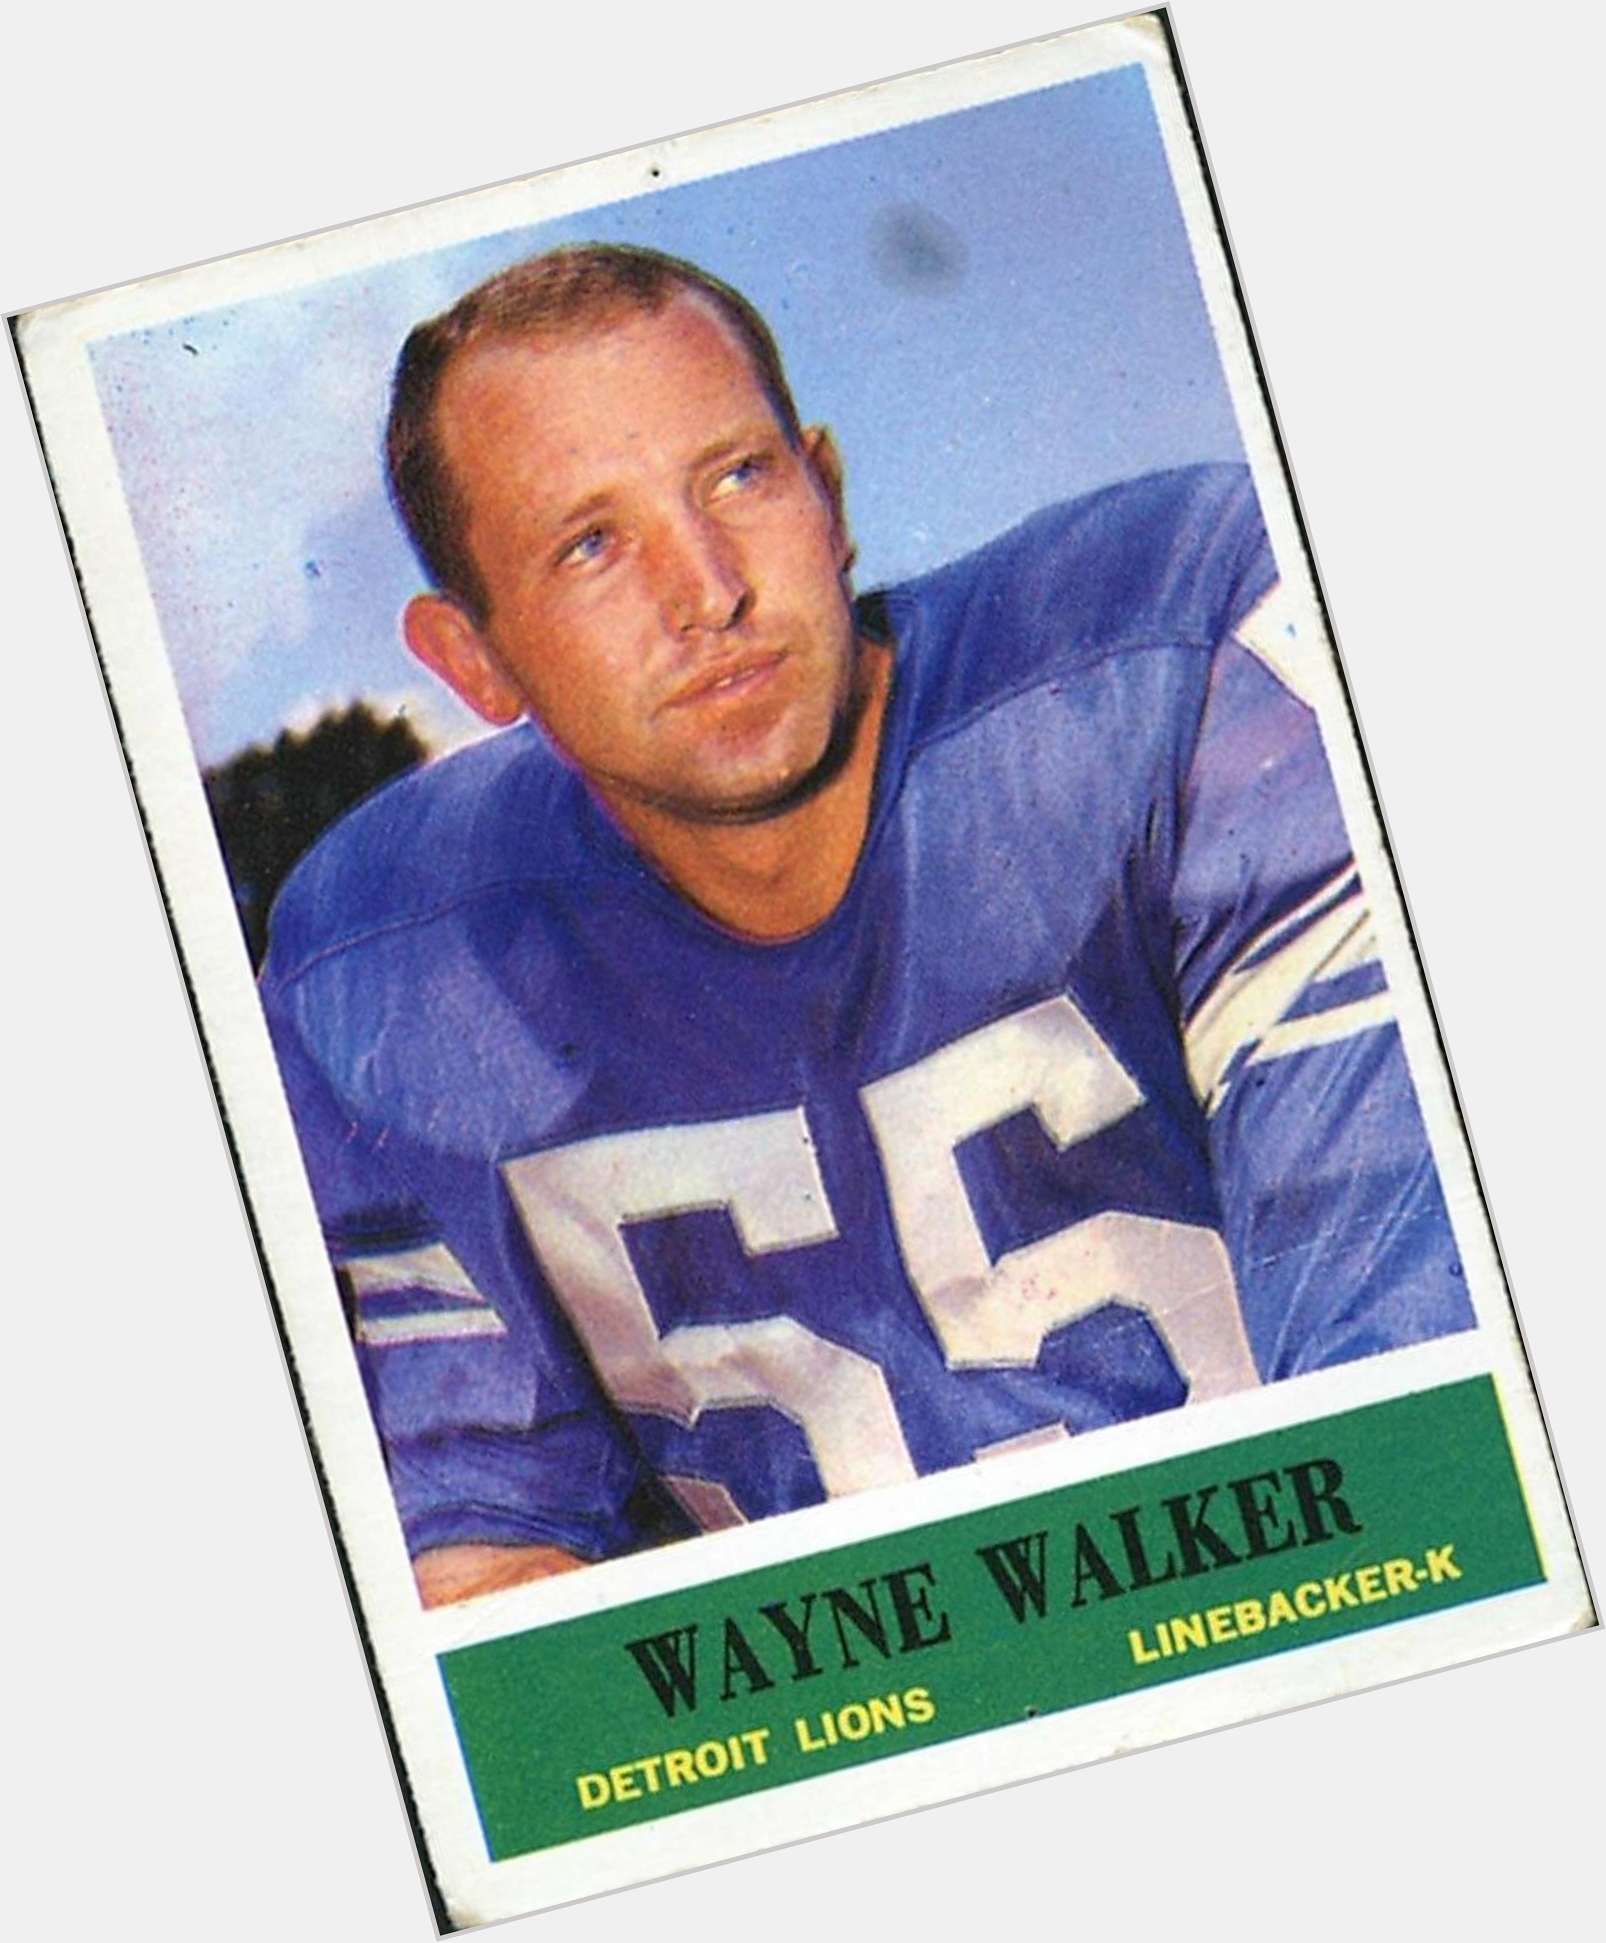 Wayne Walker birthday 2015